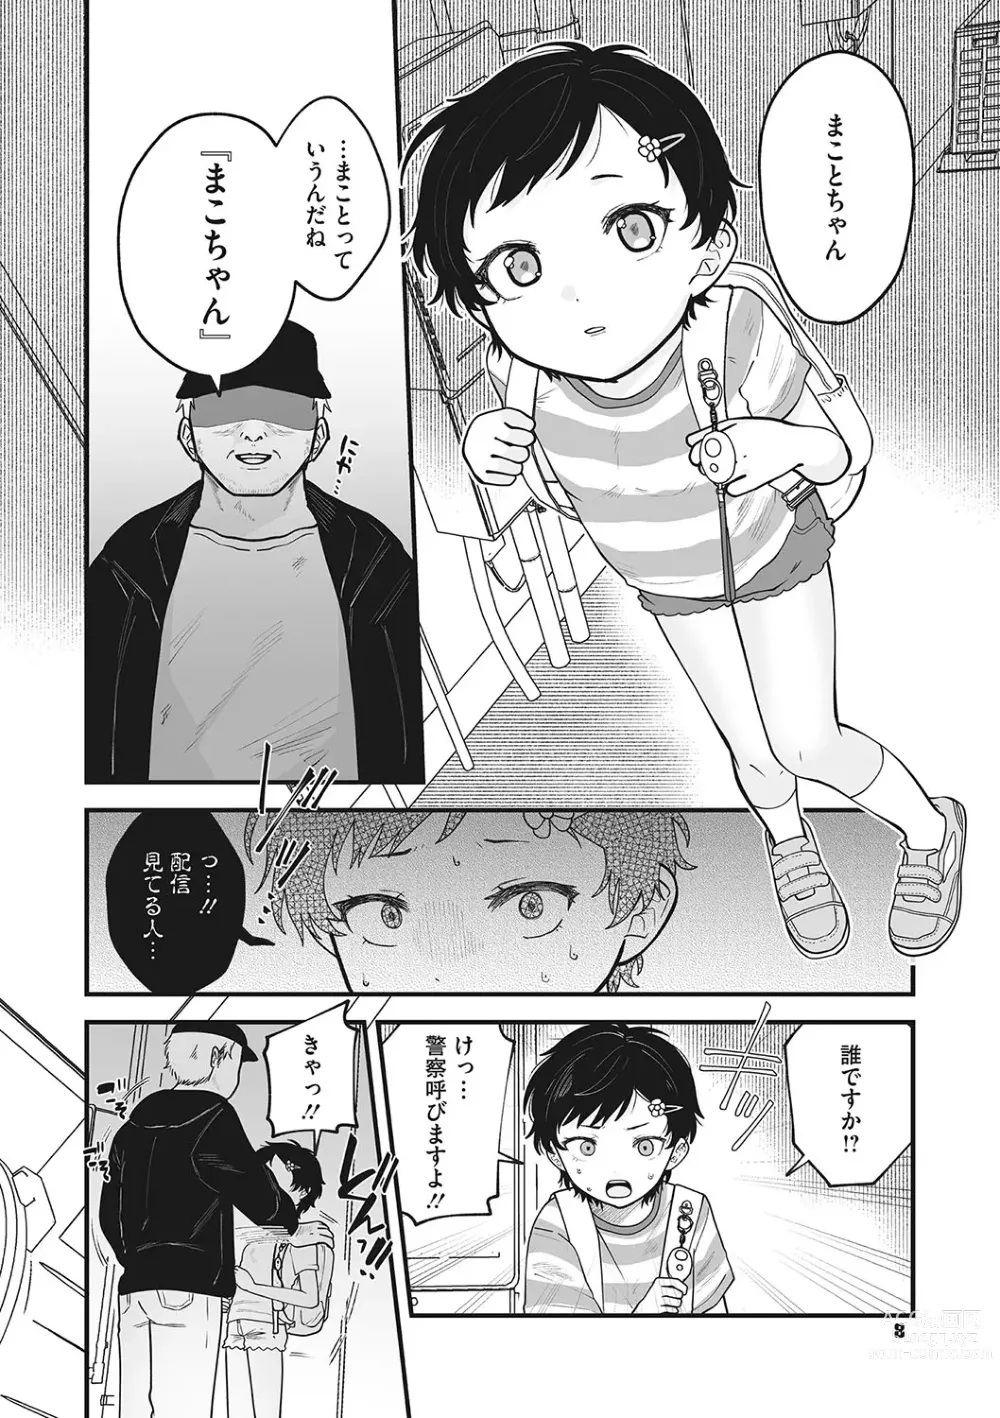 Page 9 of manga Little Girl Strike Vol. 30